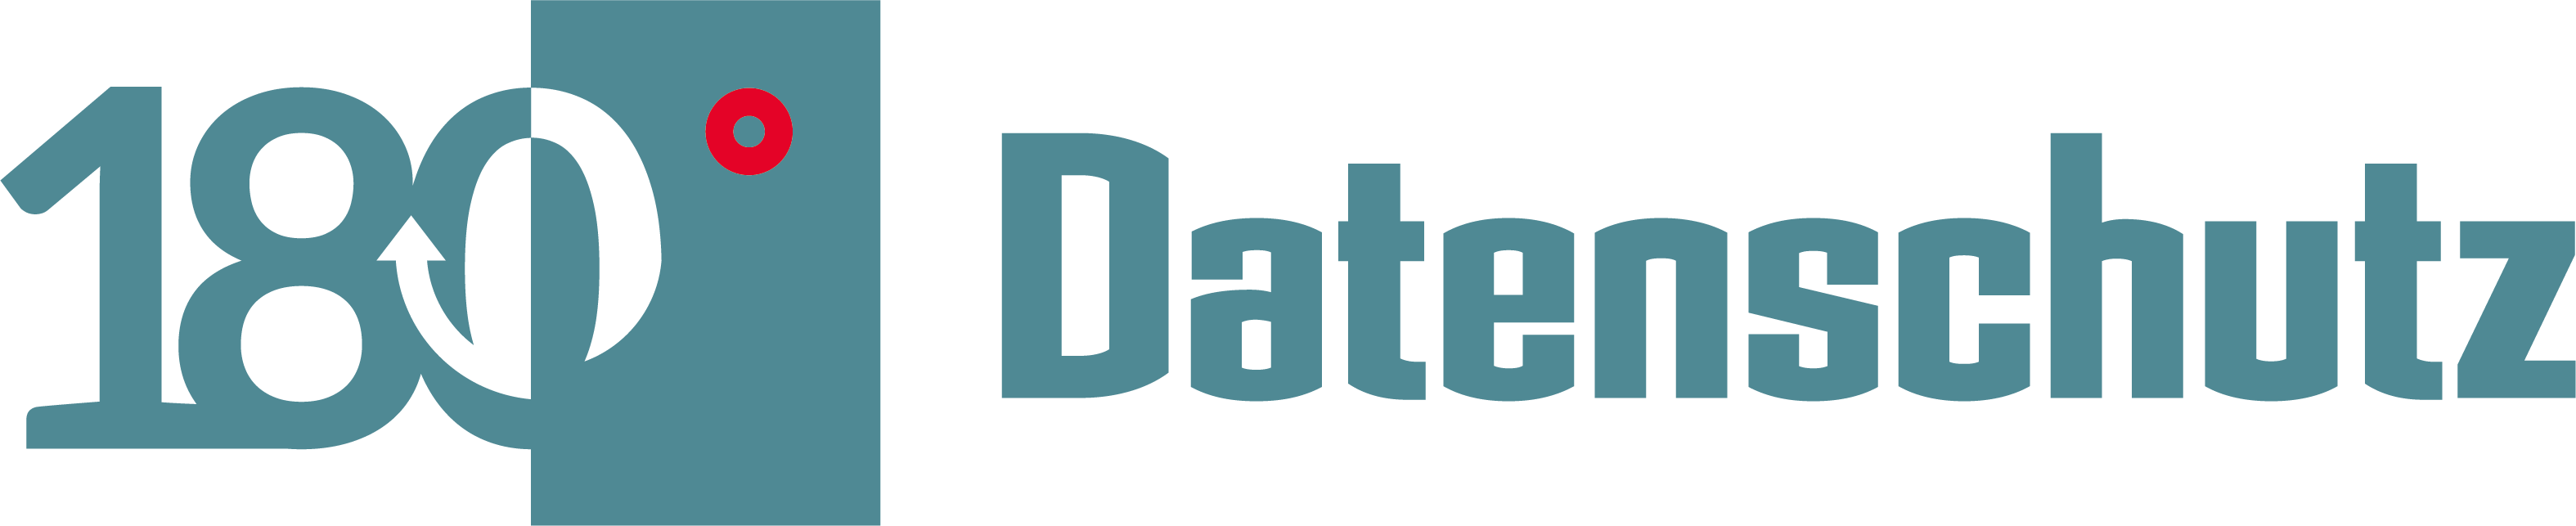 180daten-logo